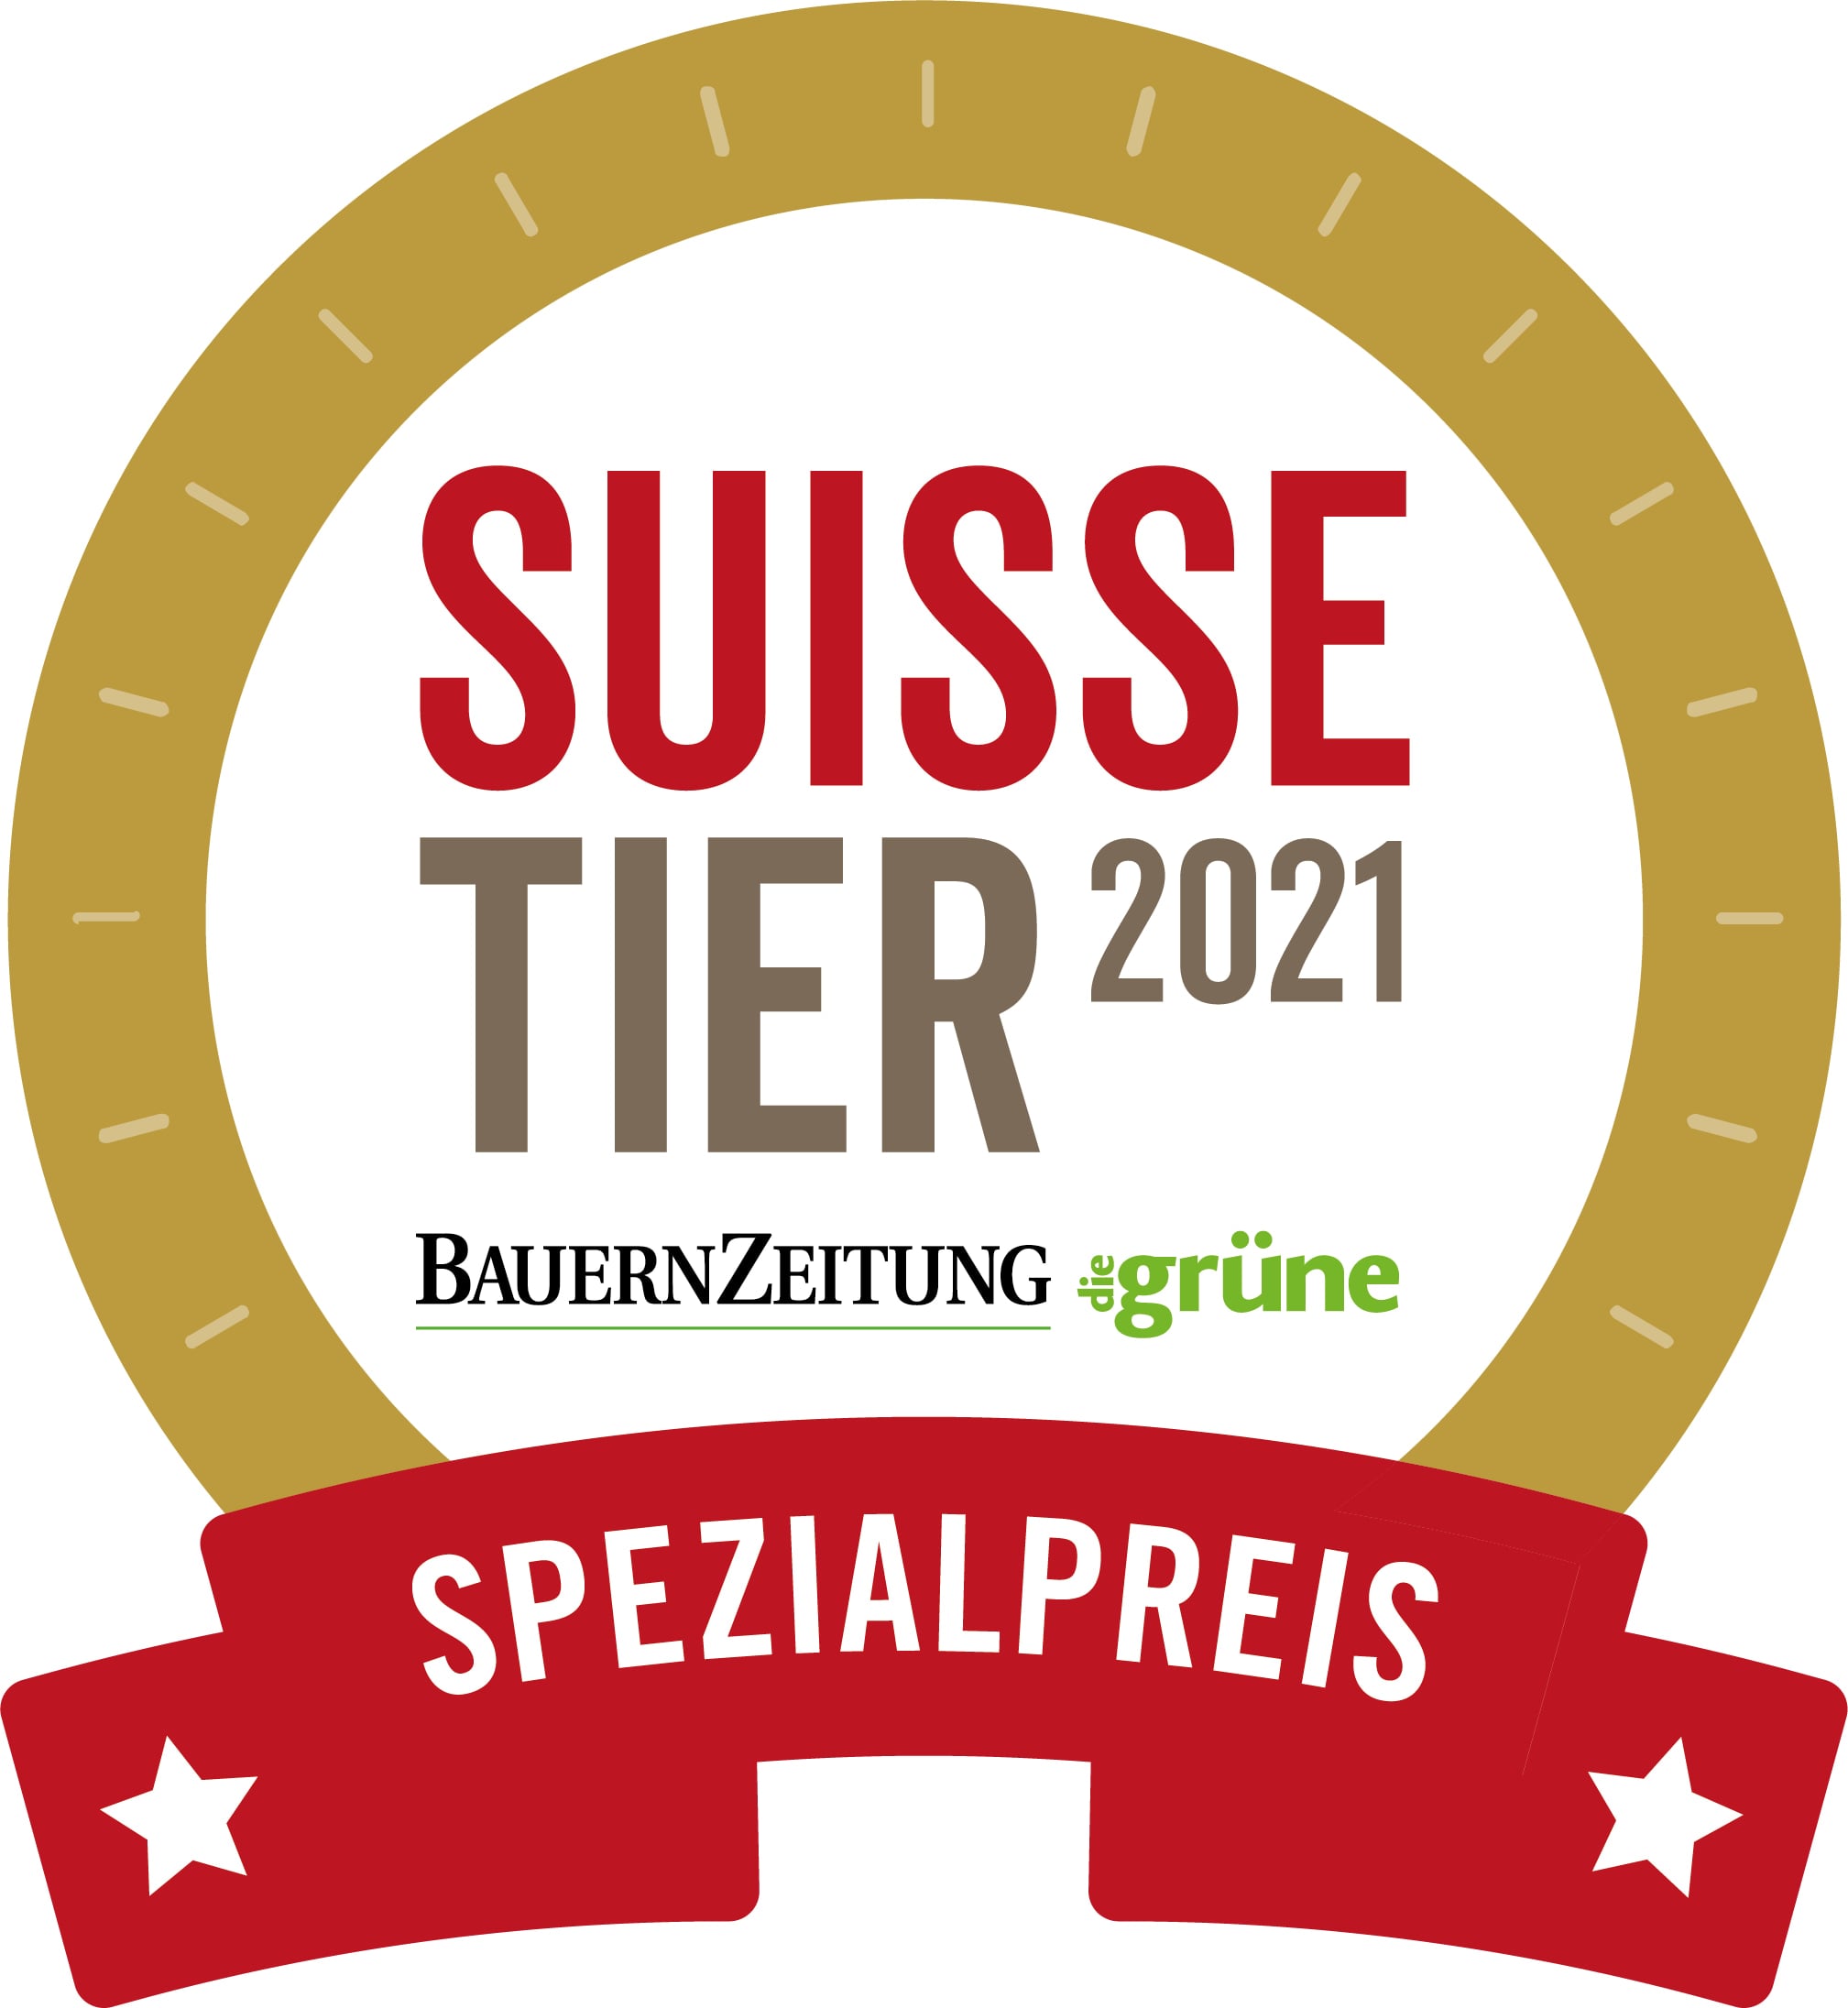 Lely Horizon – Suisse Tier 2021 Spezialpreis